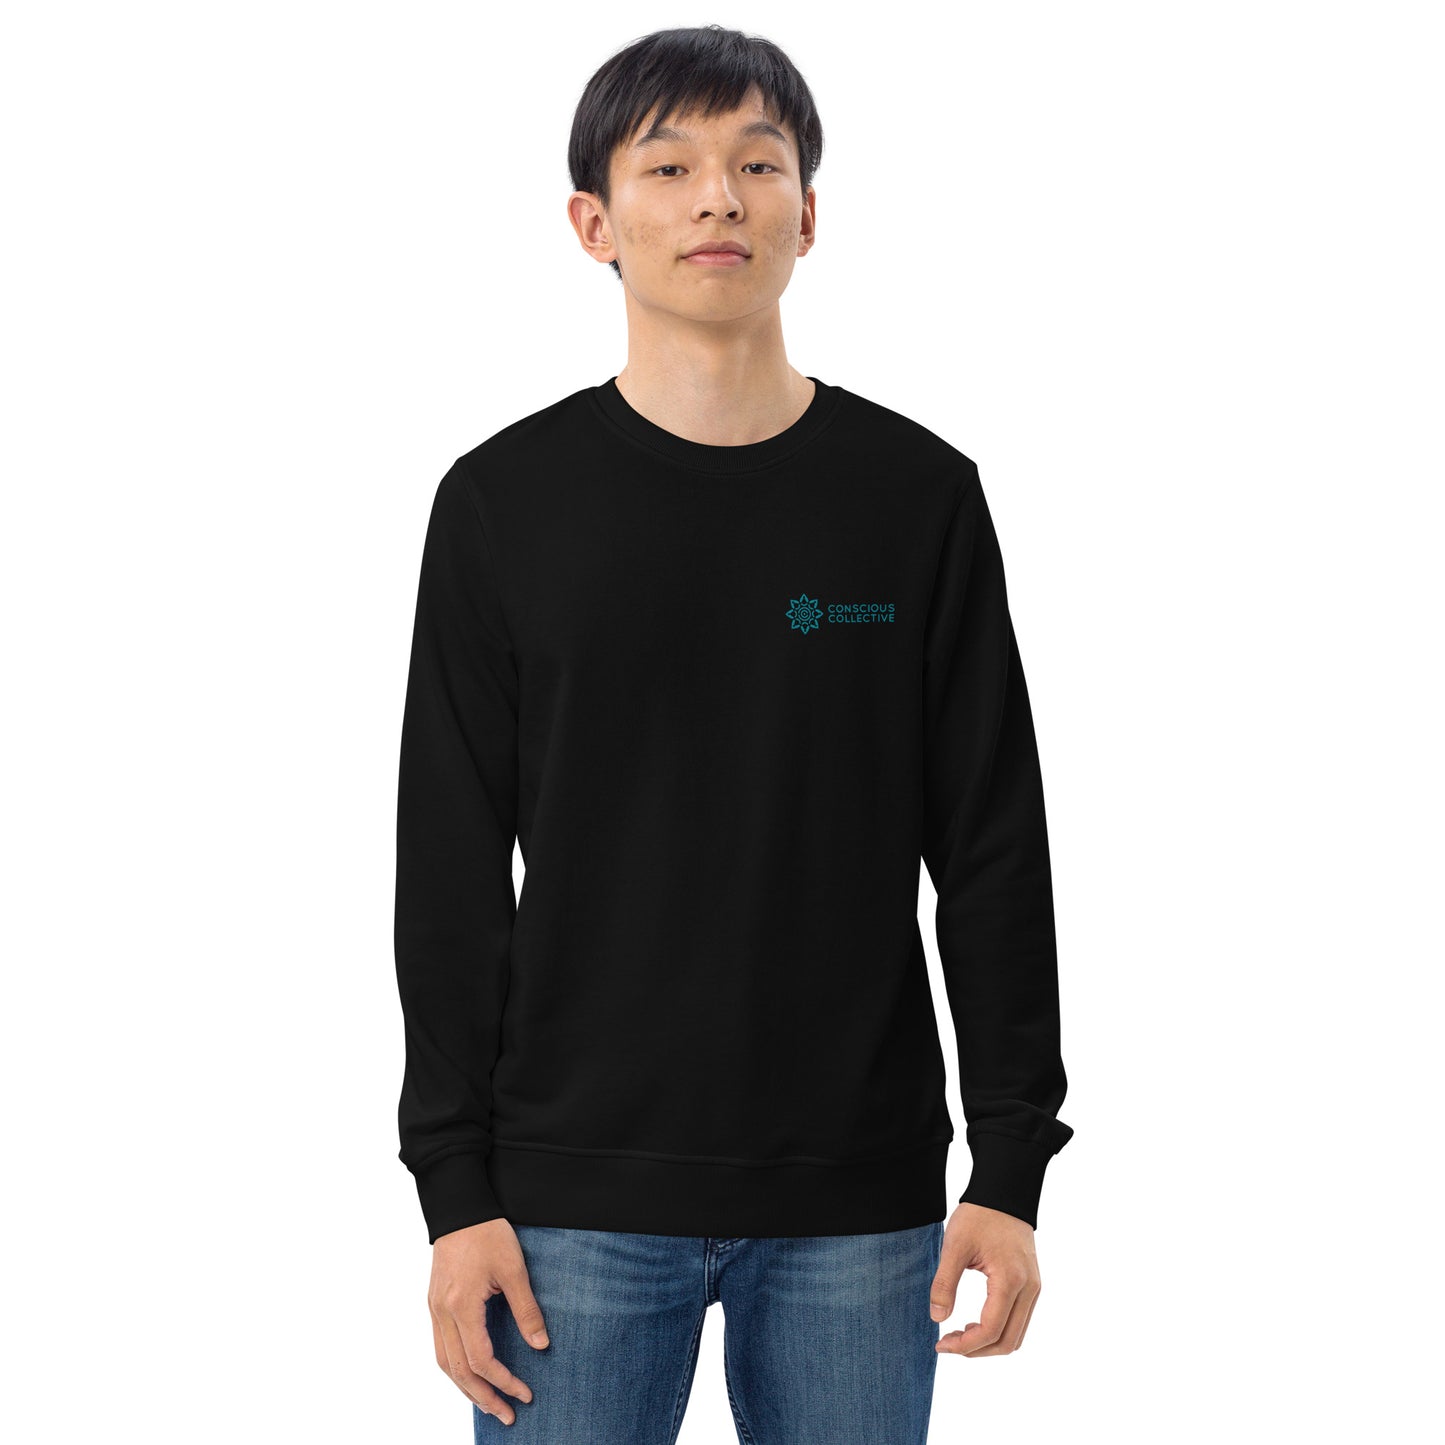 CC Logo - Unisex Organic Cotton Sweatshirt #1